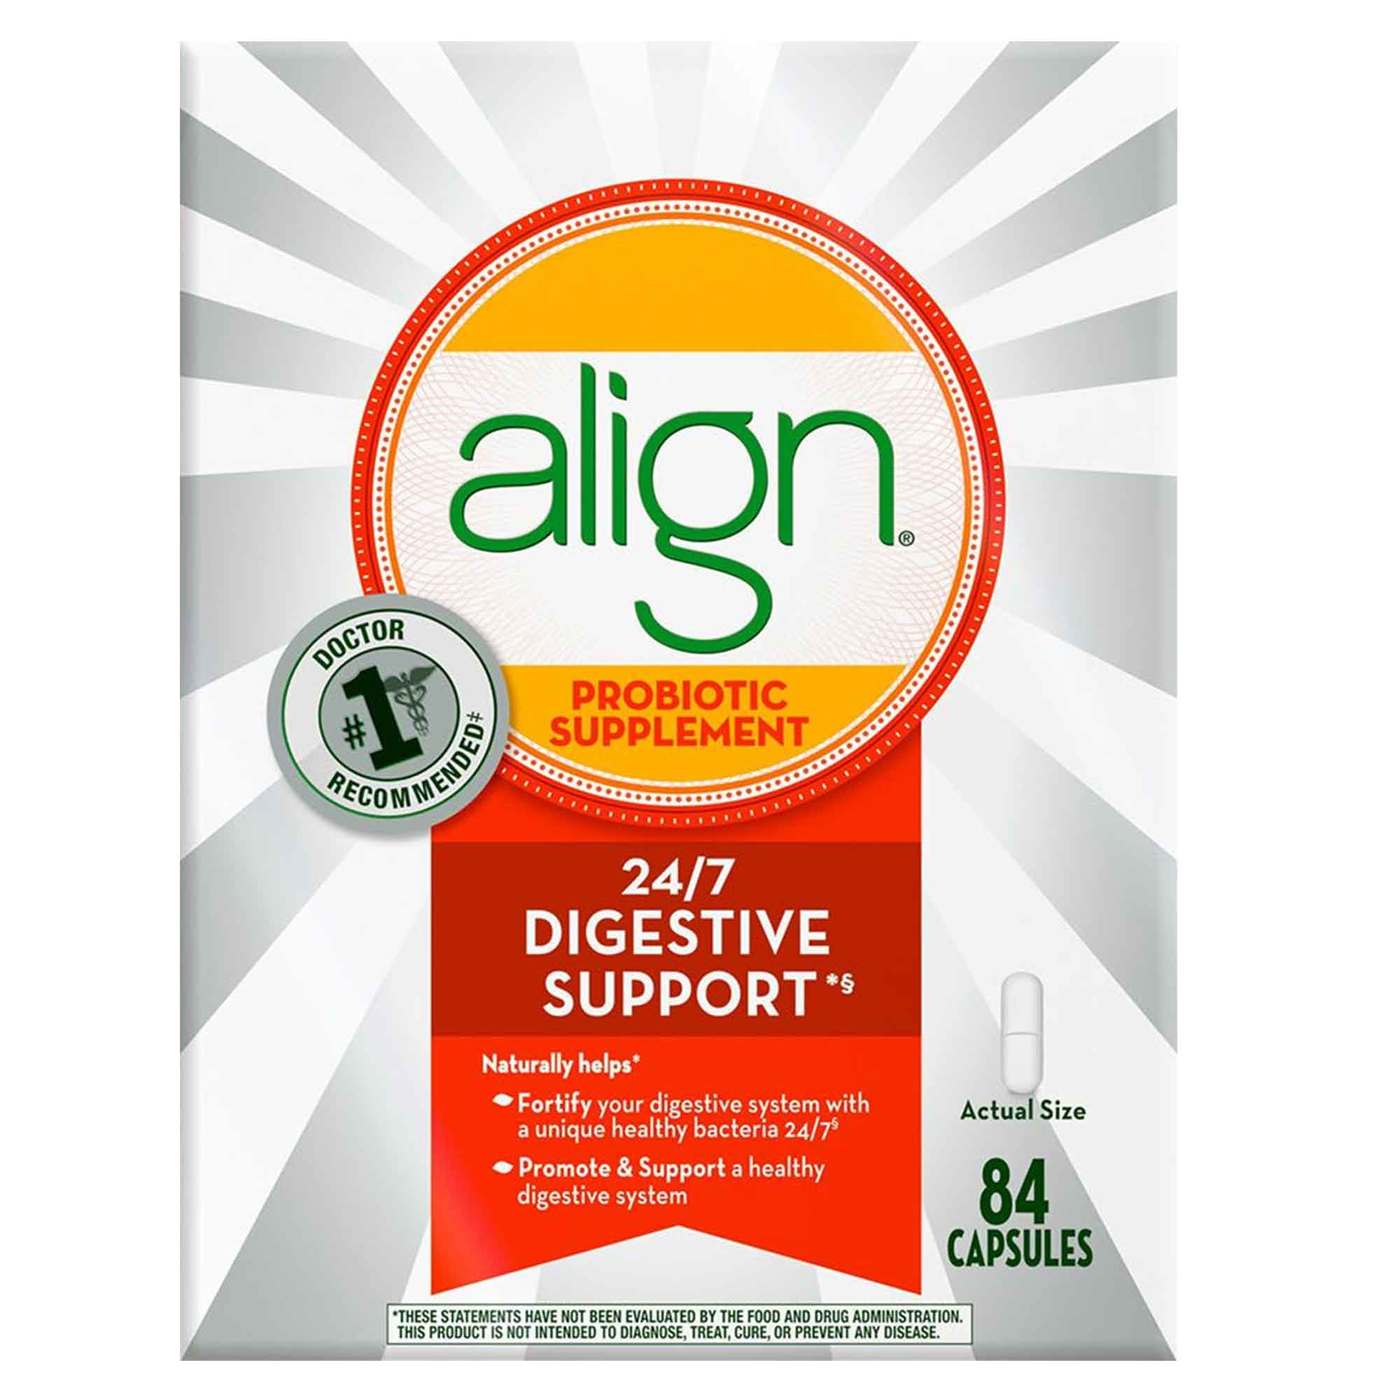 Labels Information Ideas 2020: 37 Align Probiotic Ingredients Label